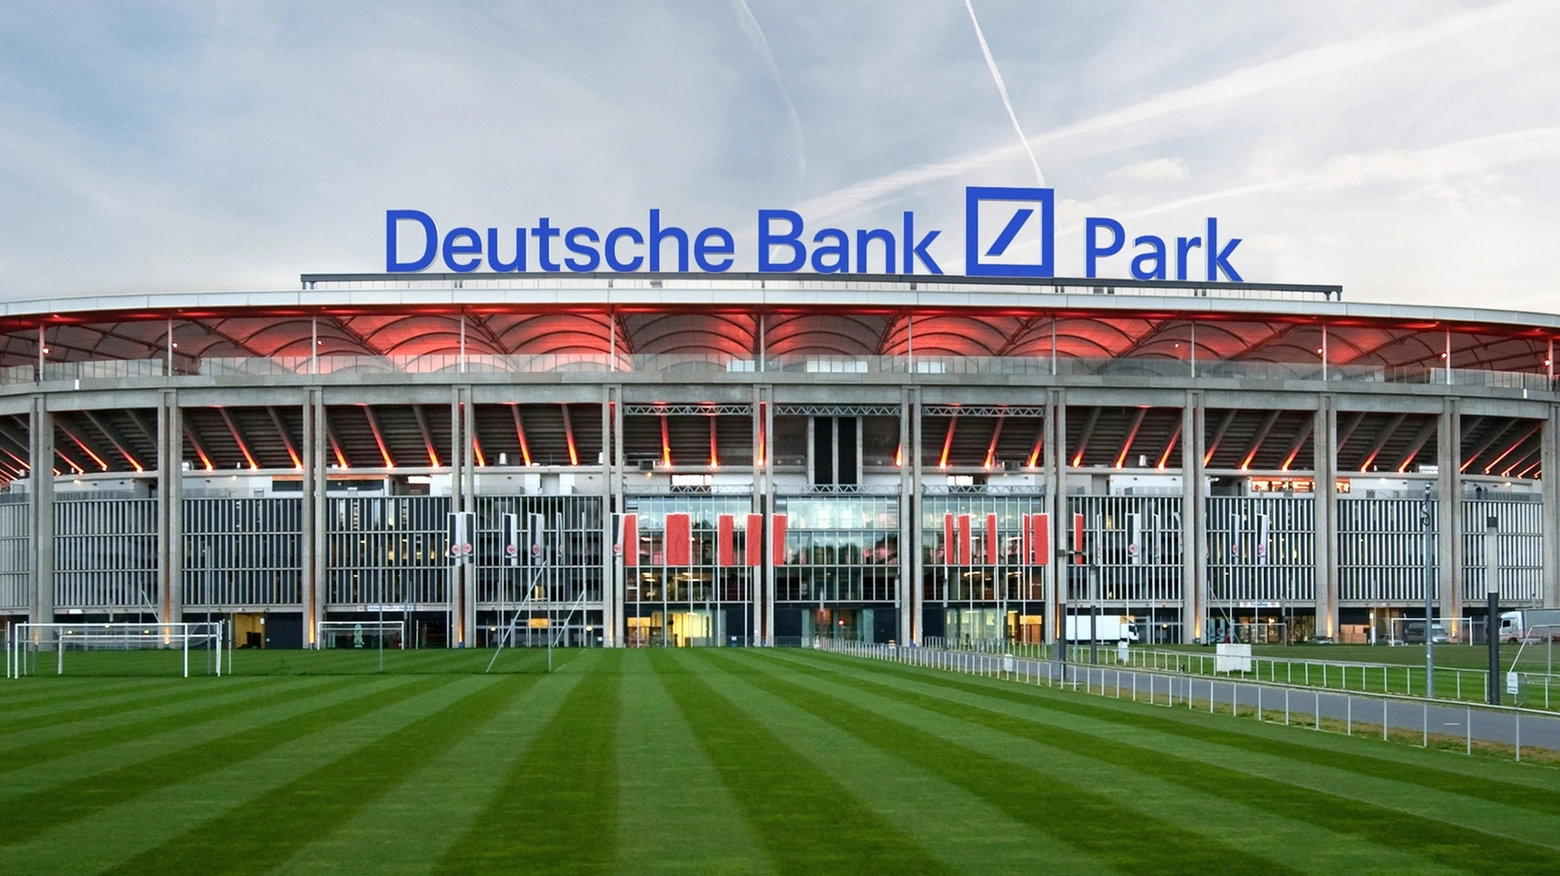 La Deutsche Bank Park o Frankfurt Arena